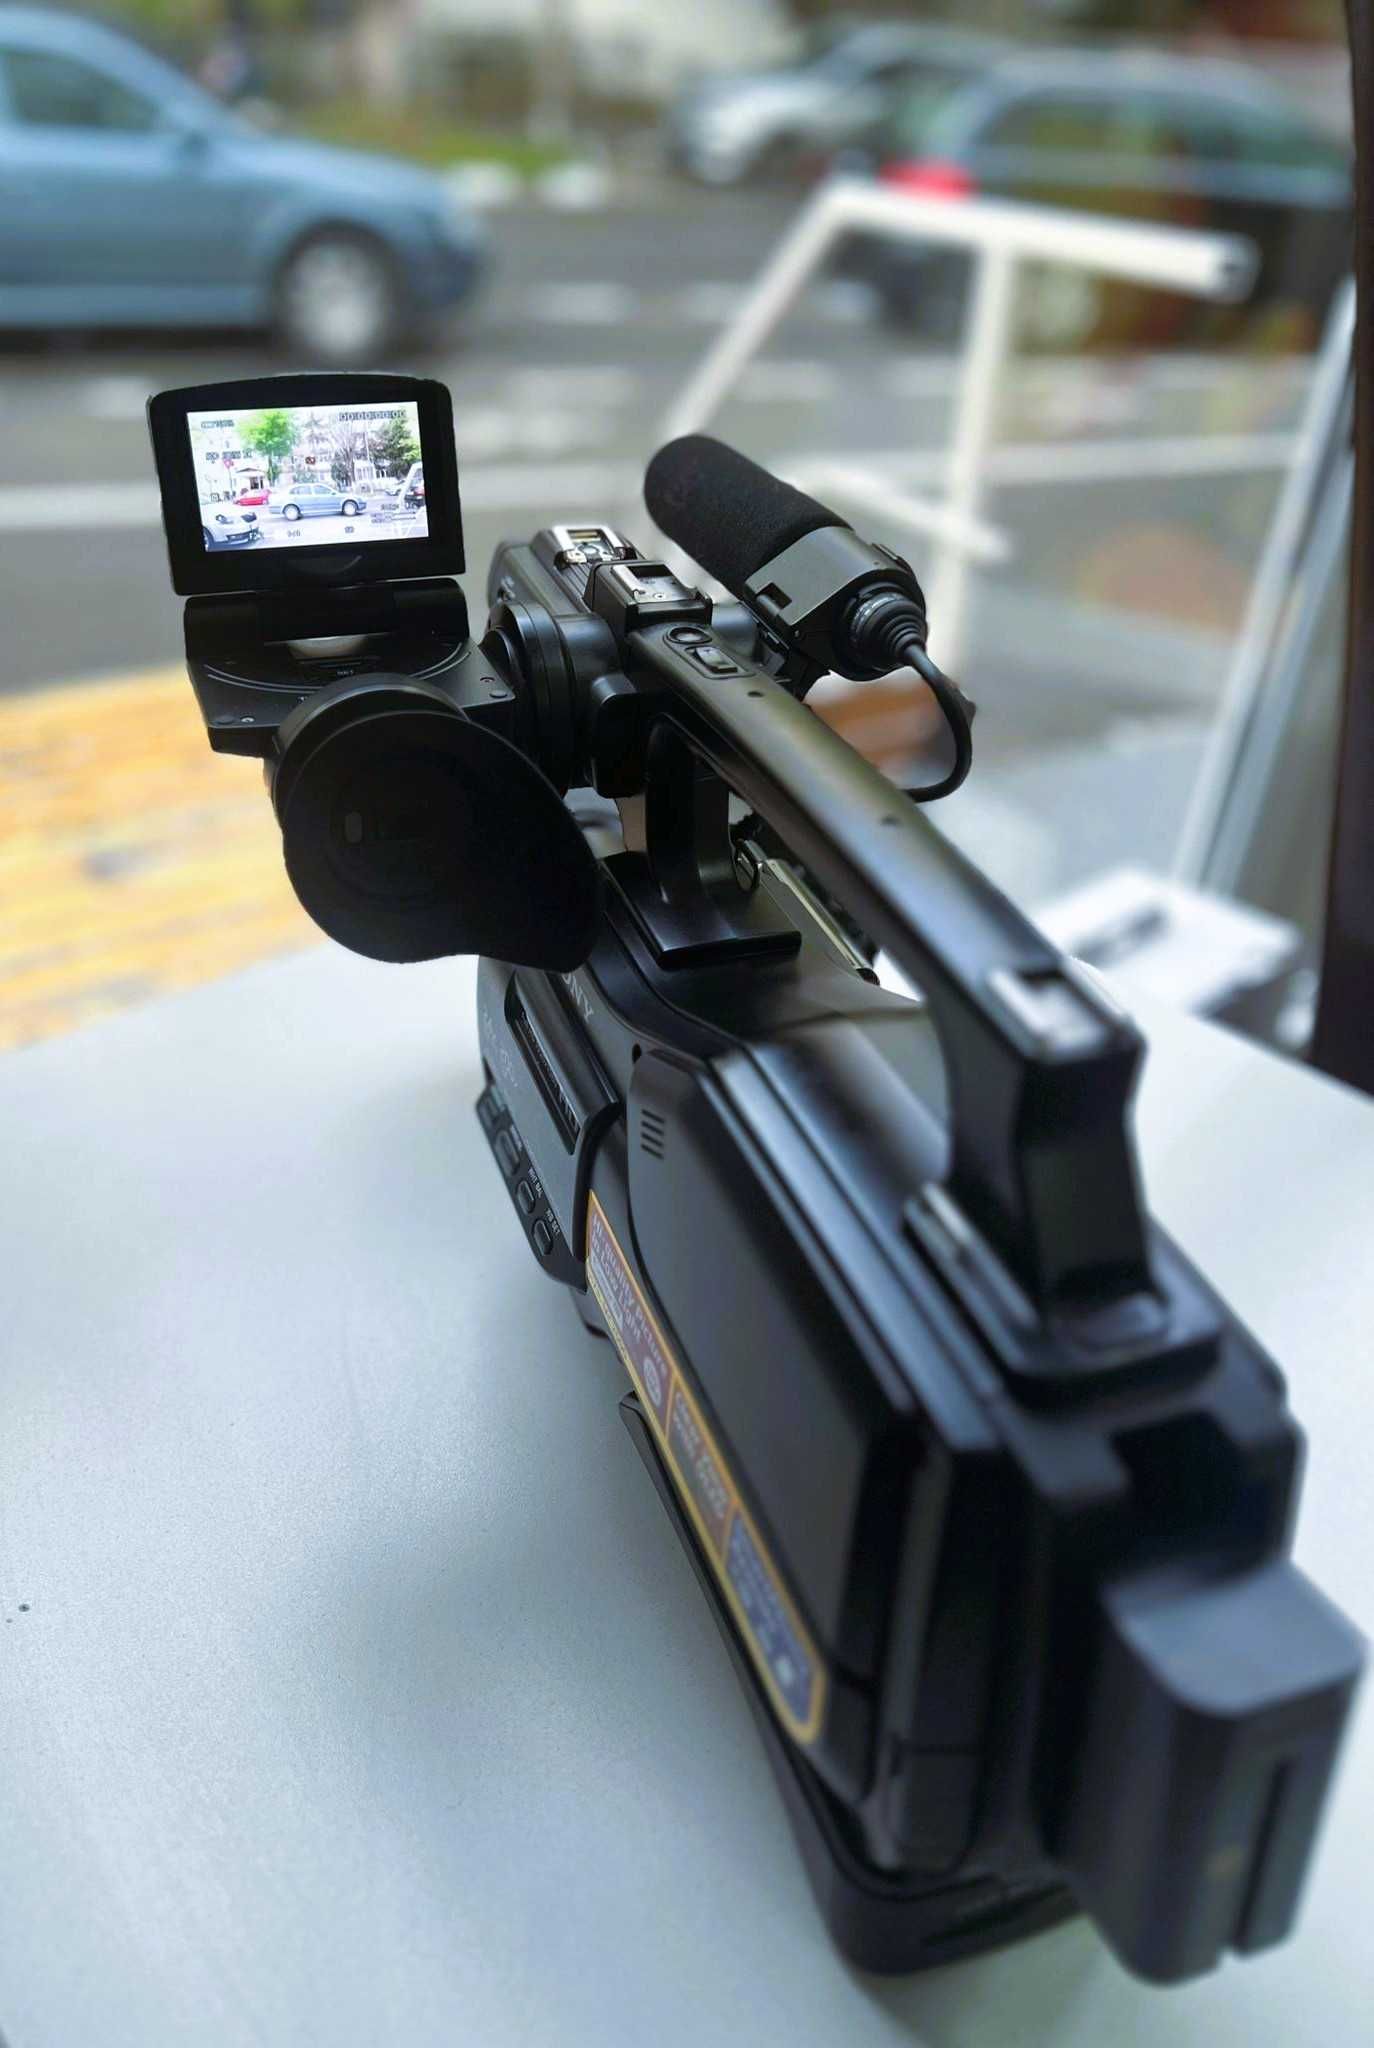 Camera video Sony HXR-MC2500,impecabila,folosita ocazional.